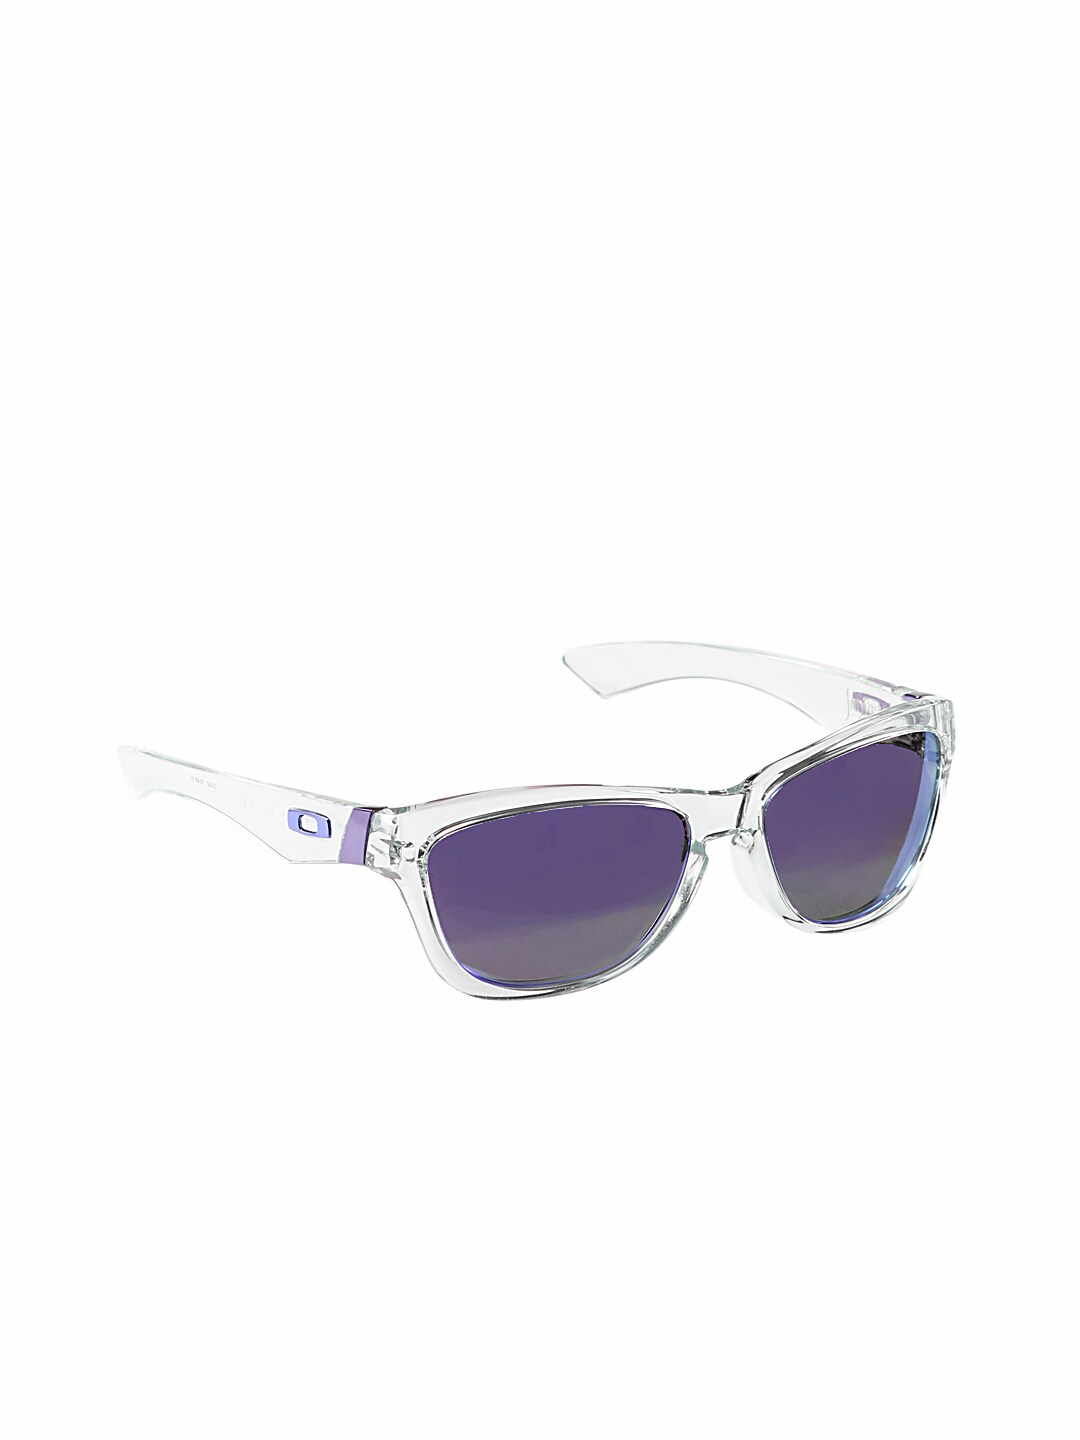 Oakley Men Jupiter Purple Sunglasses